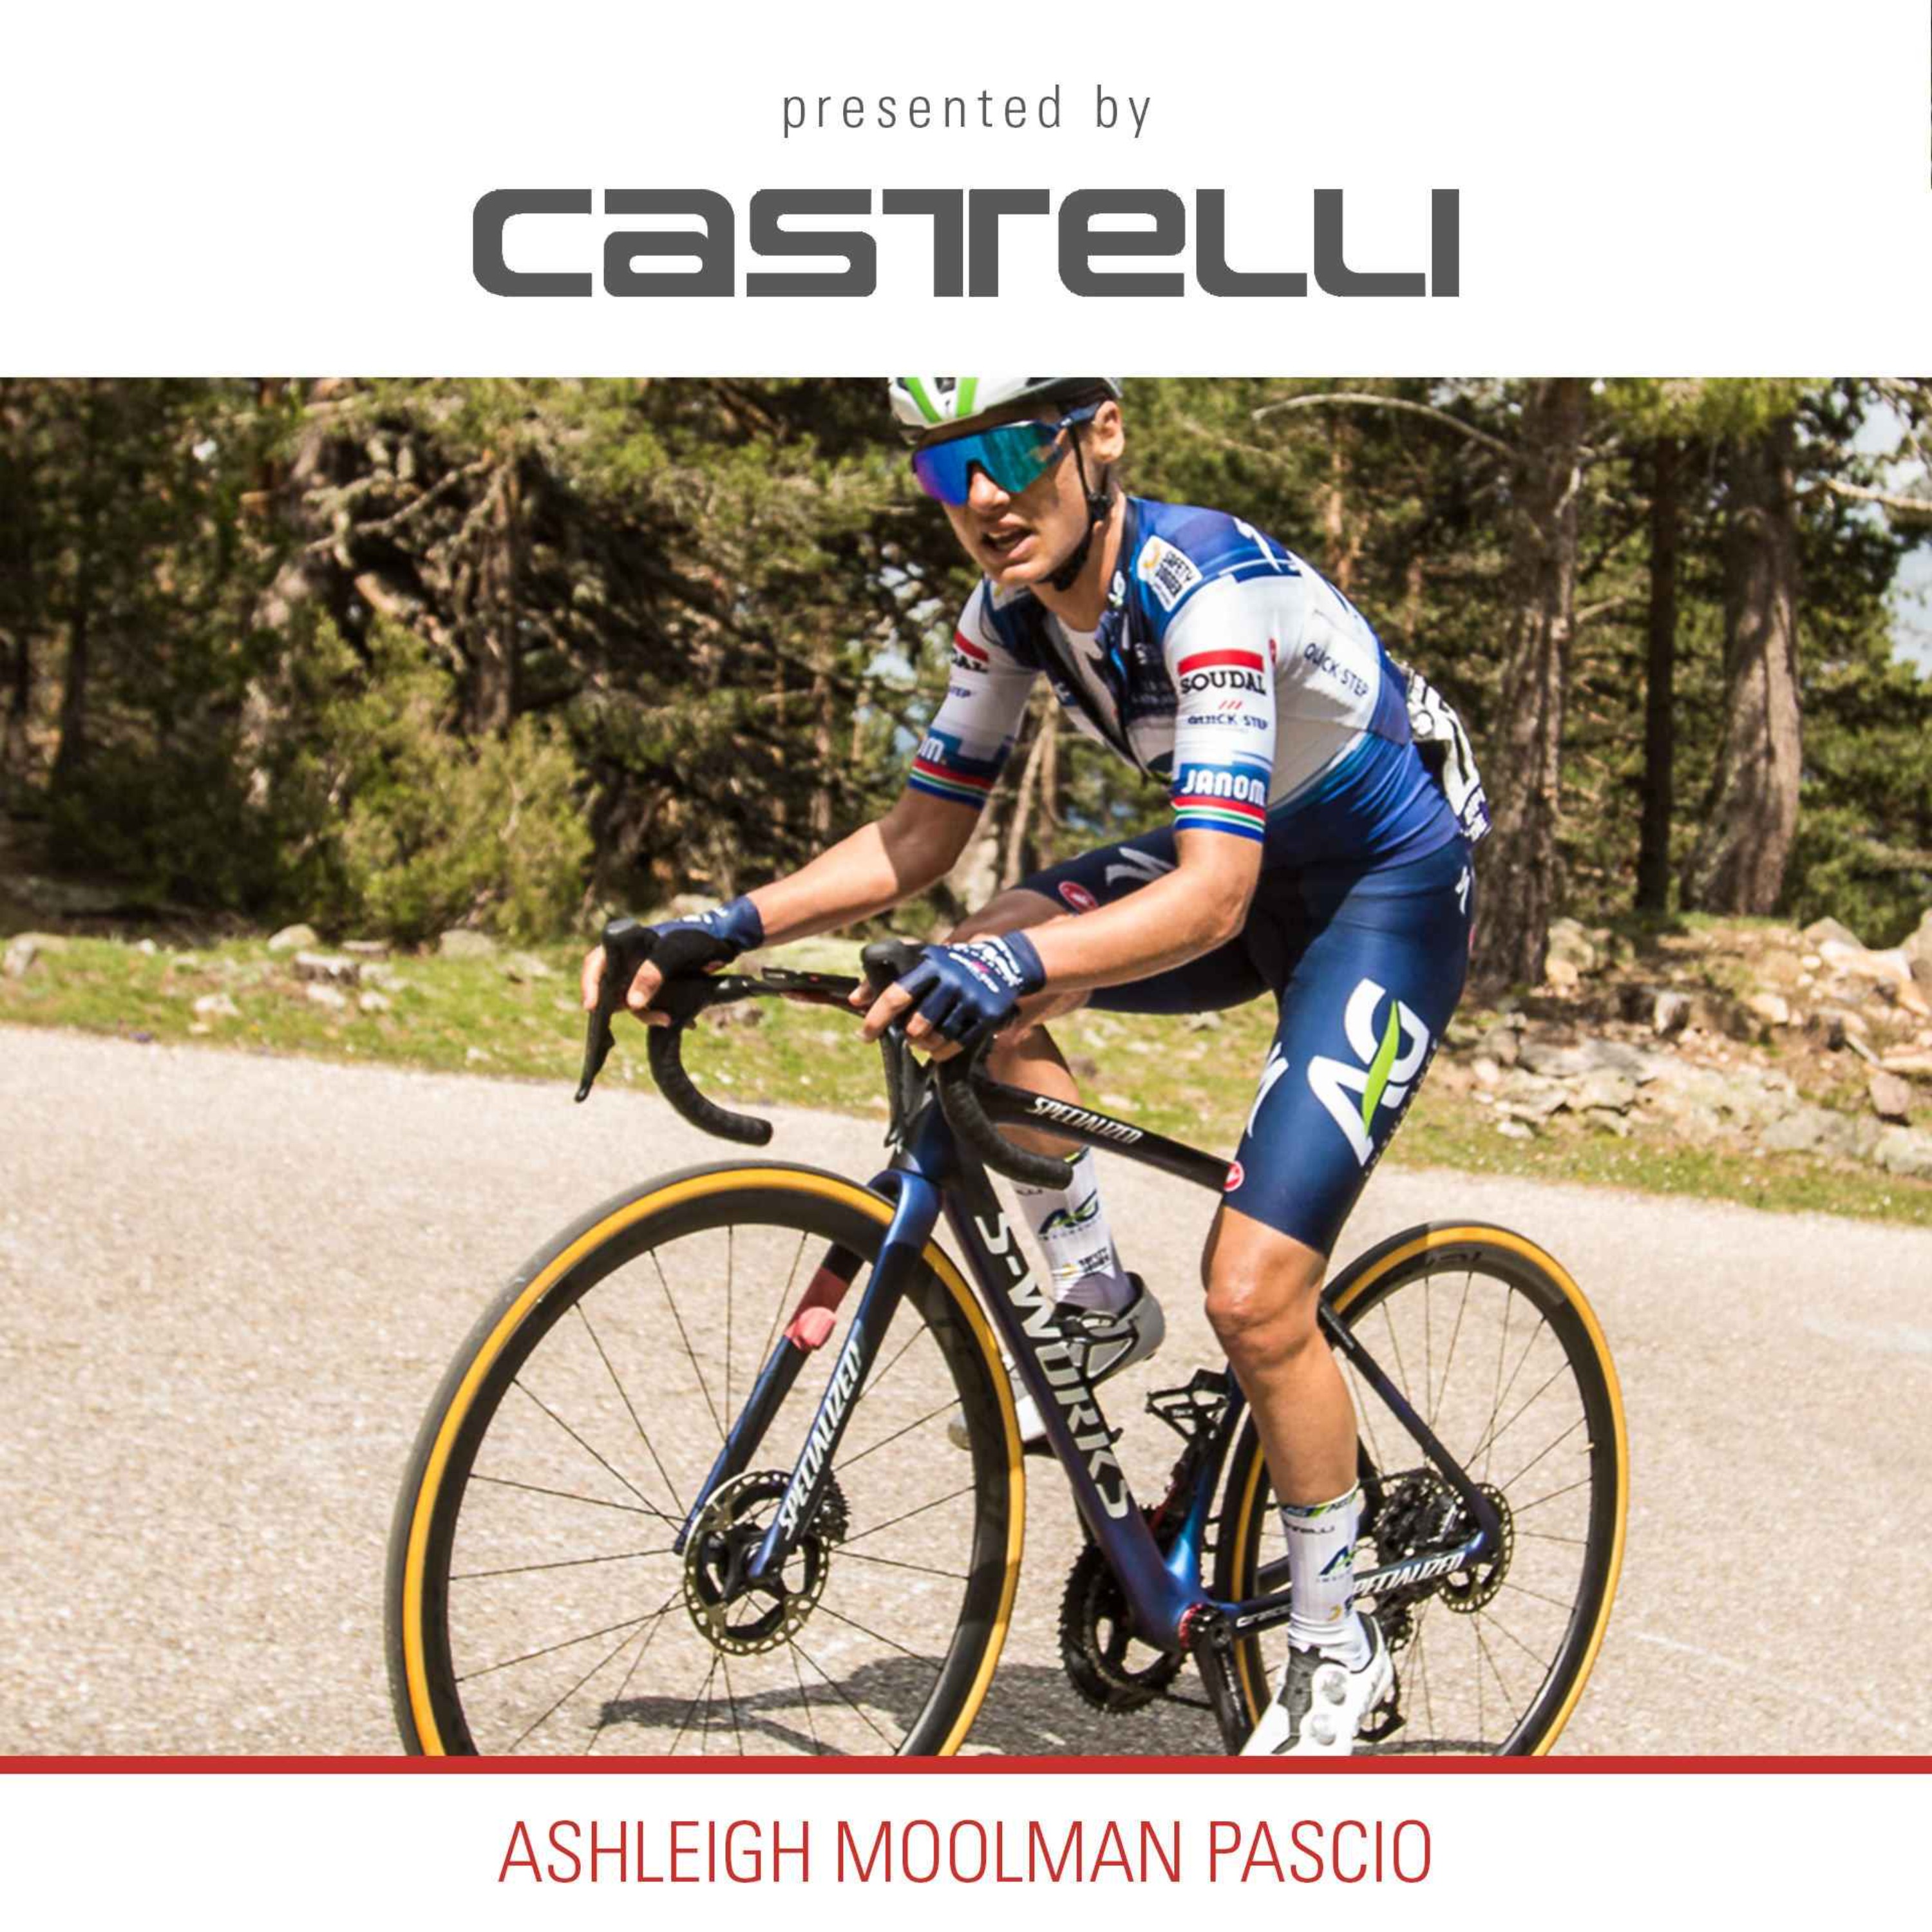 ASHLEIGH MOOLMAN-PASIO | Breaking New Ground in Cycling